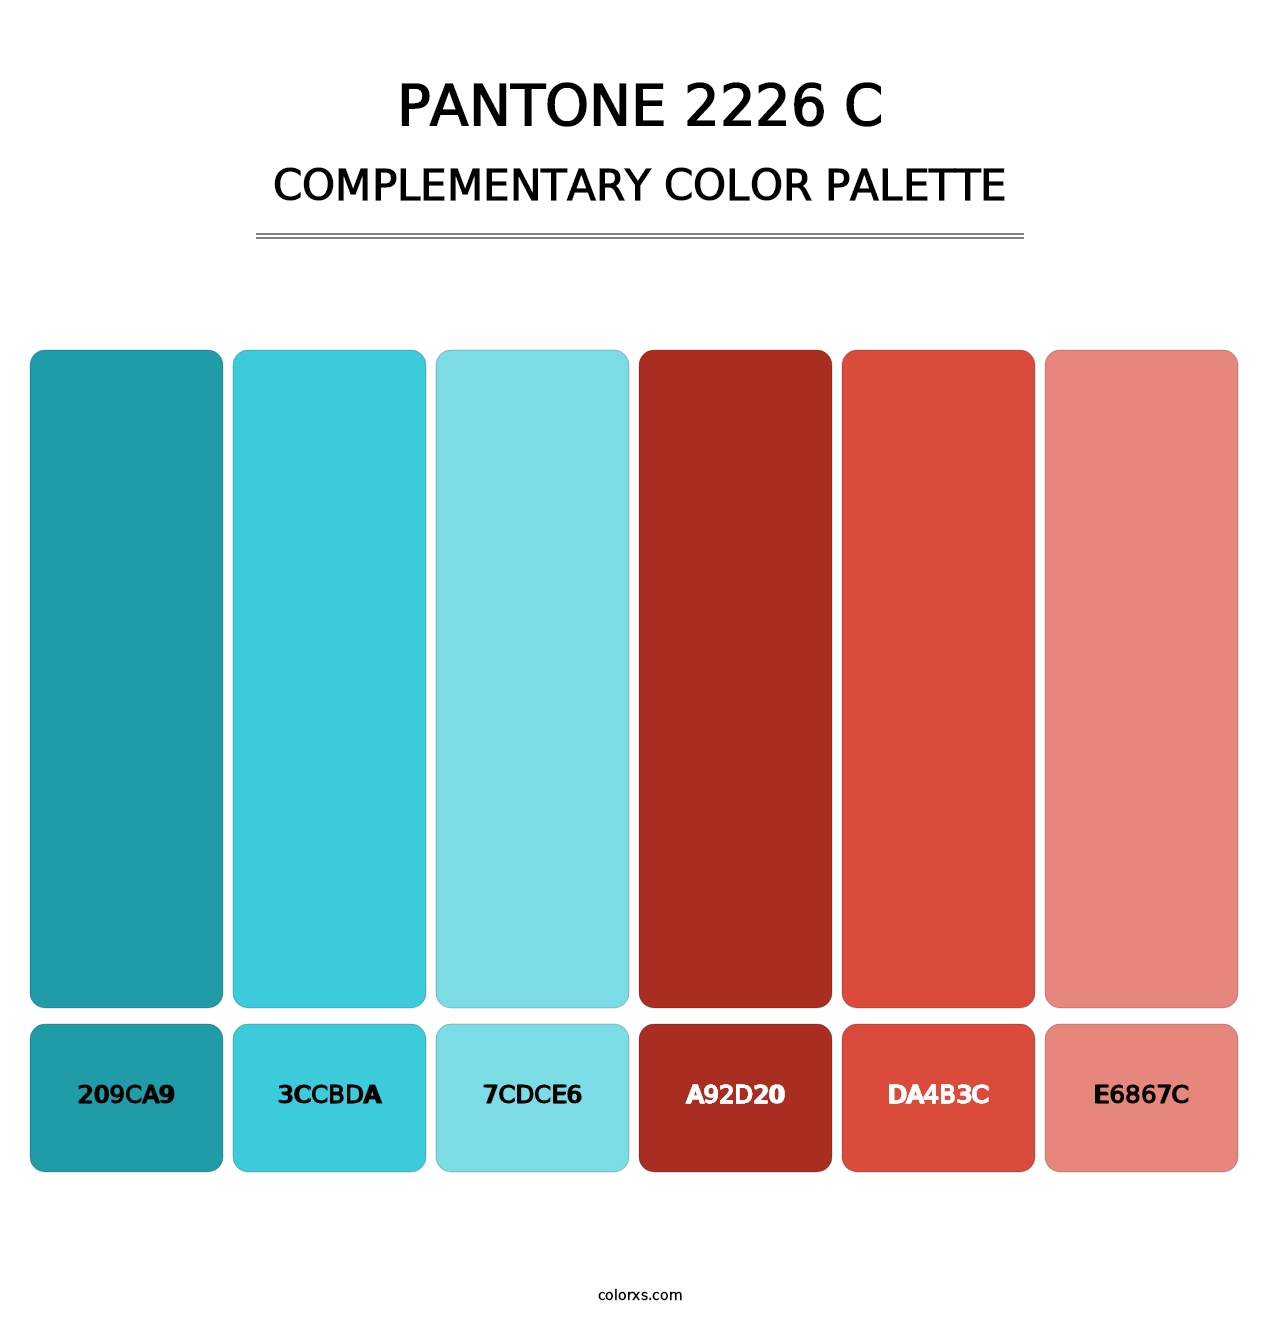 PANTONE 2226 C - Complementary Color Palette